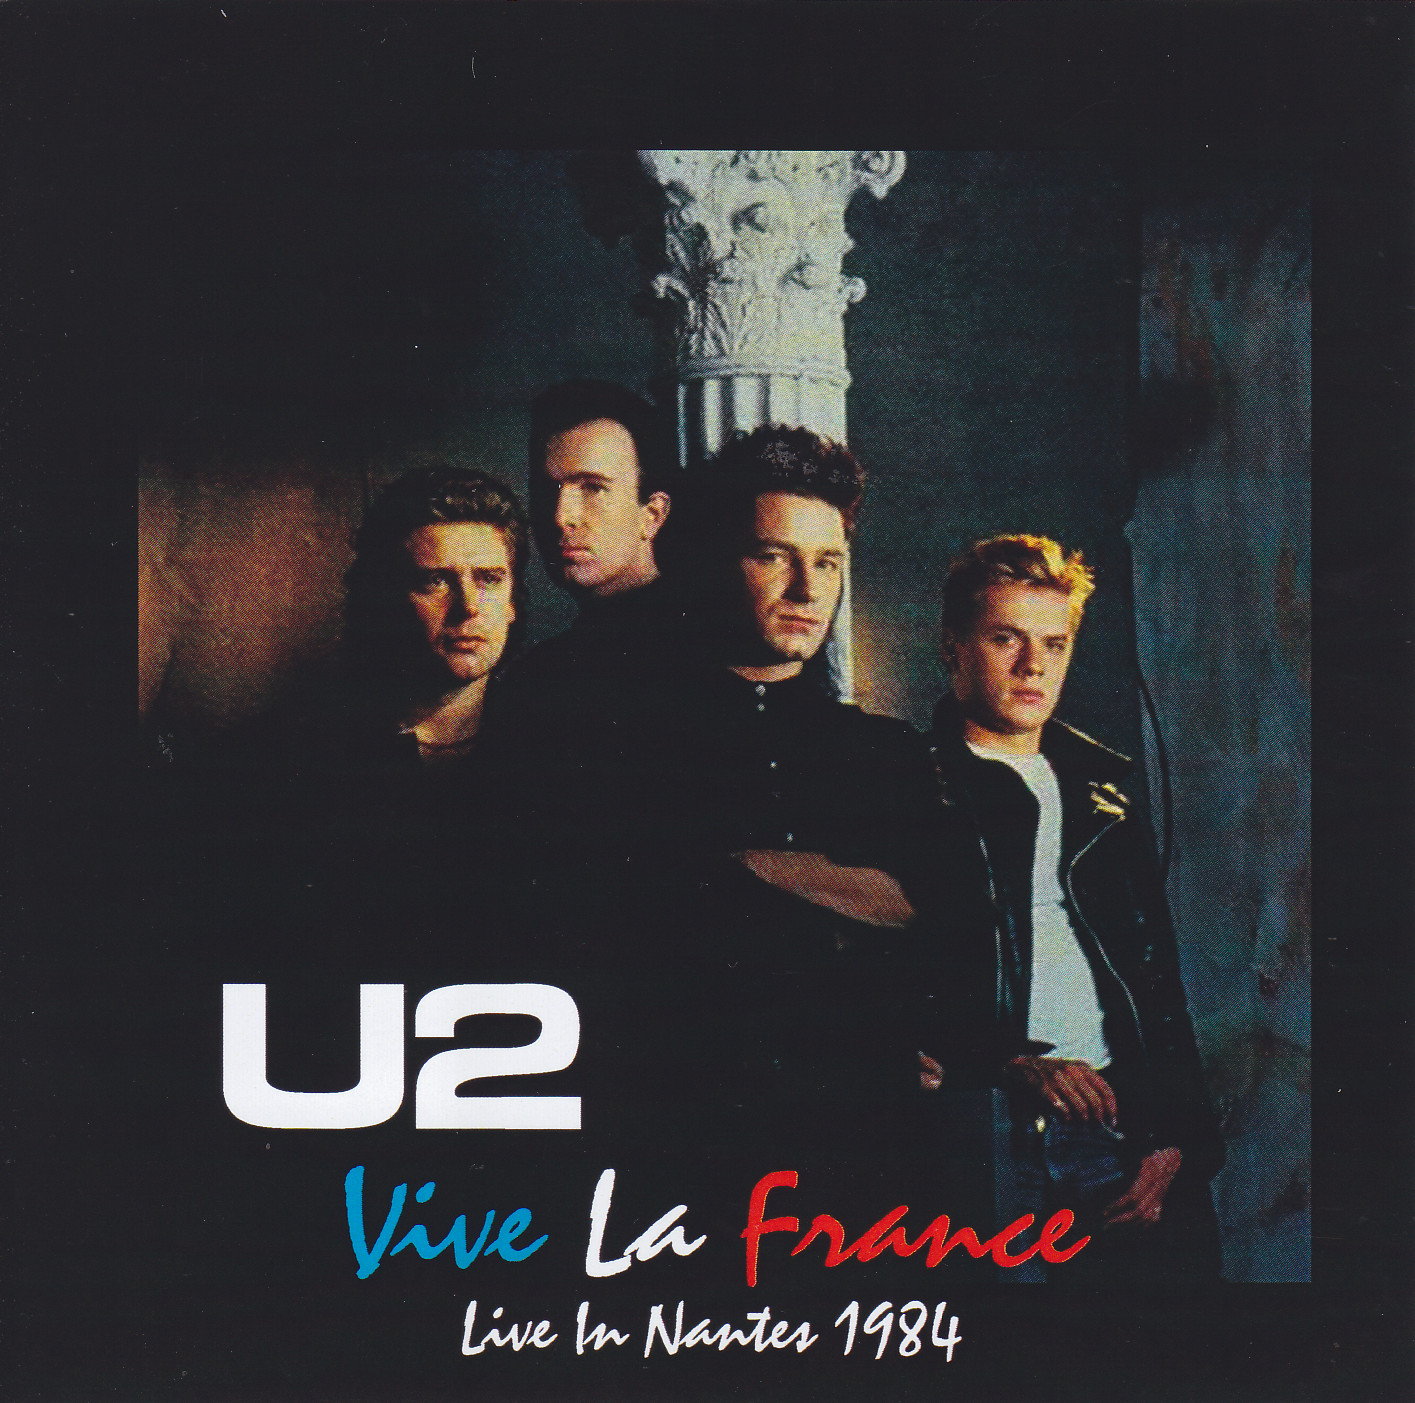 (2CD) U2 / Vive La France Live In Nantes 1984 PROJECT ZIP